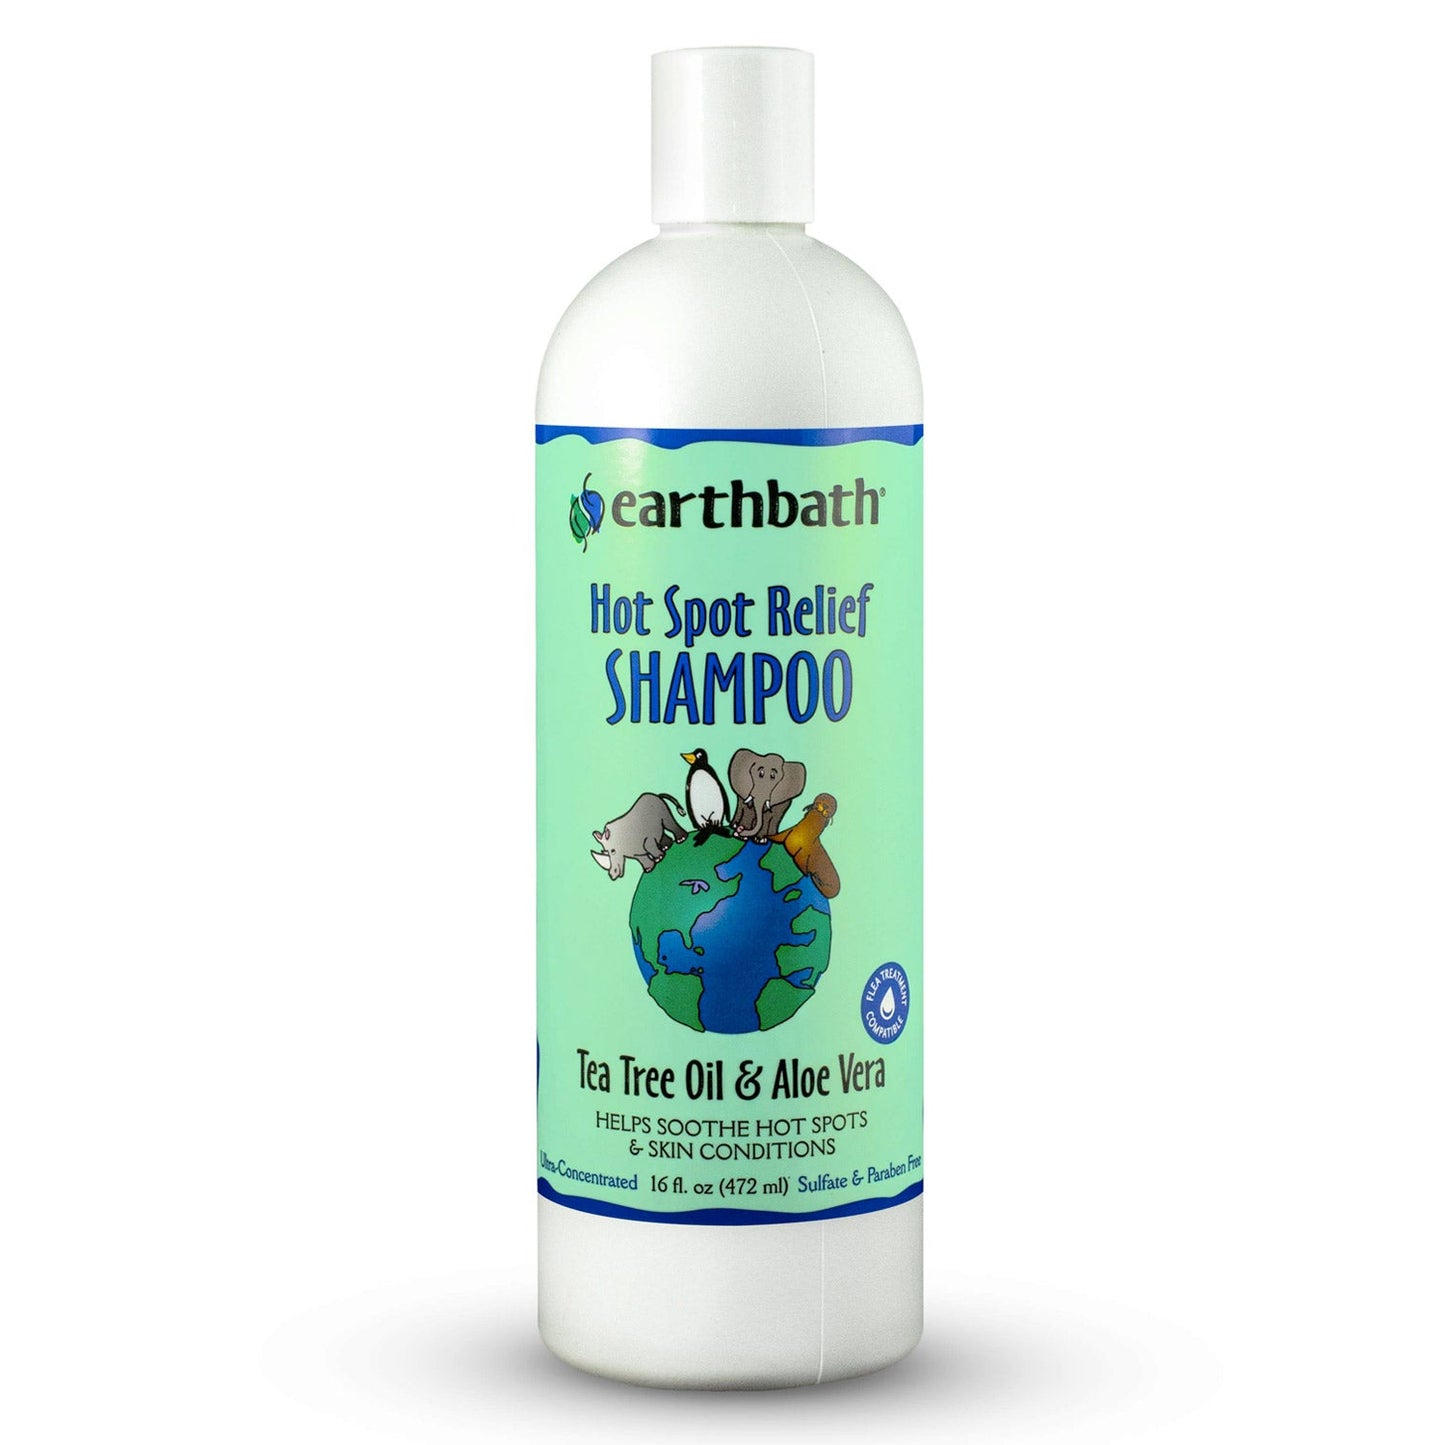 earthbath® Hot Spot Relief Shampoo, Tea Tree Oil & Aloe Vera, Helps Soothe Hot Spots & Skin Condition